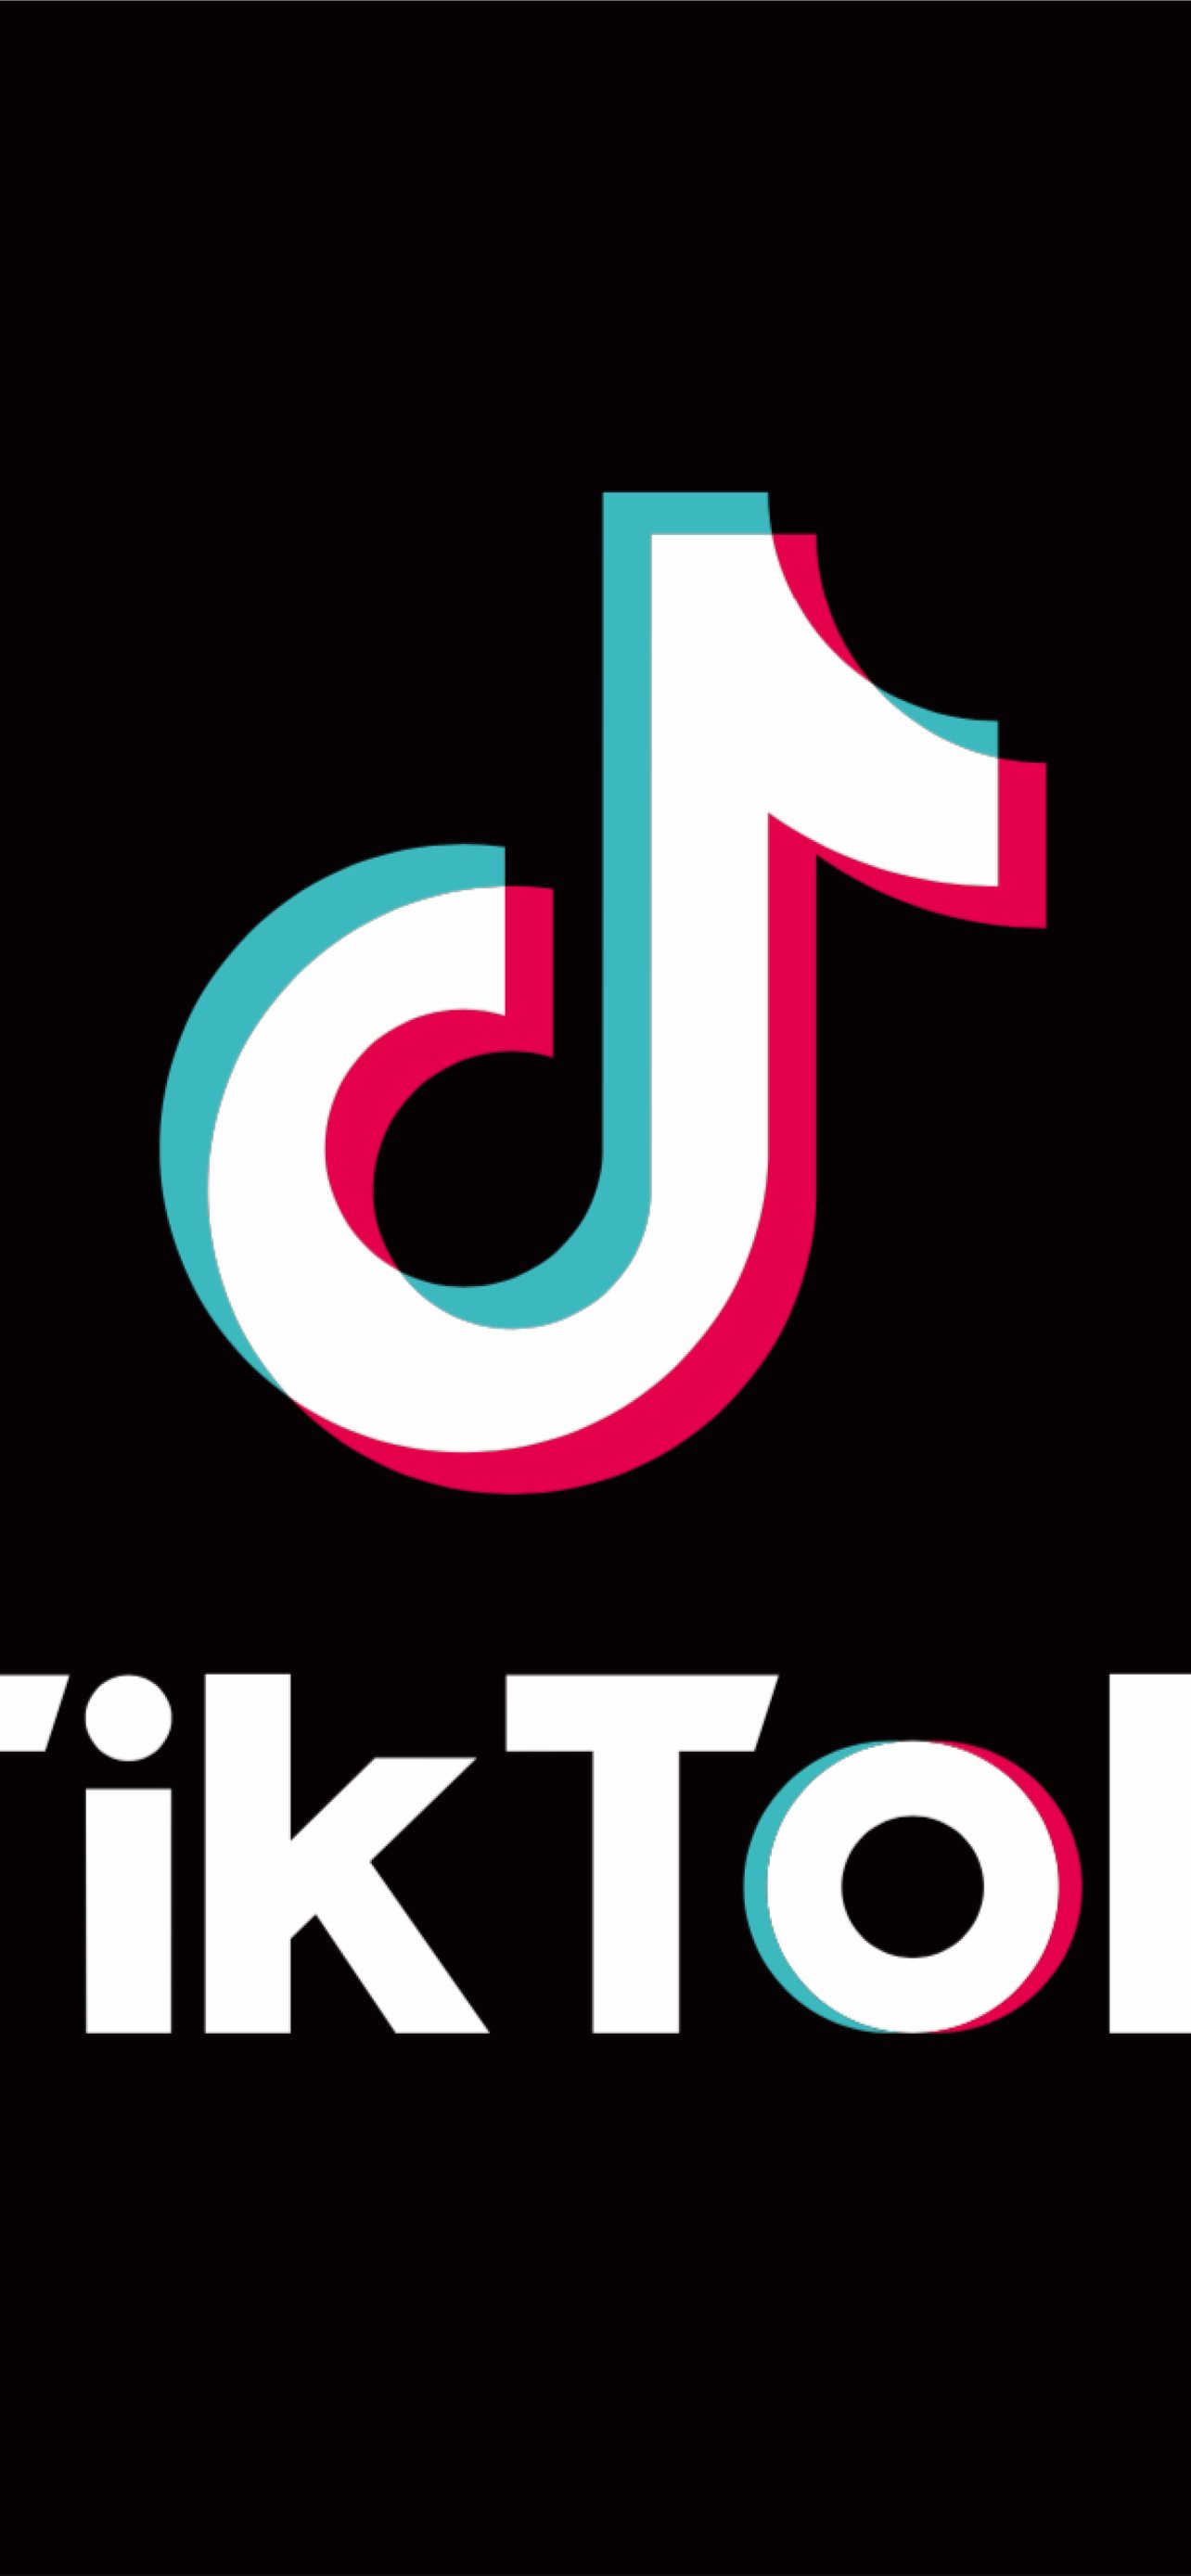 Tiktok Logo Sony Xperia X Xz Z5 Premium Hd Other 4 Iphone Wallpapers Free Download